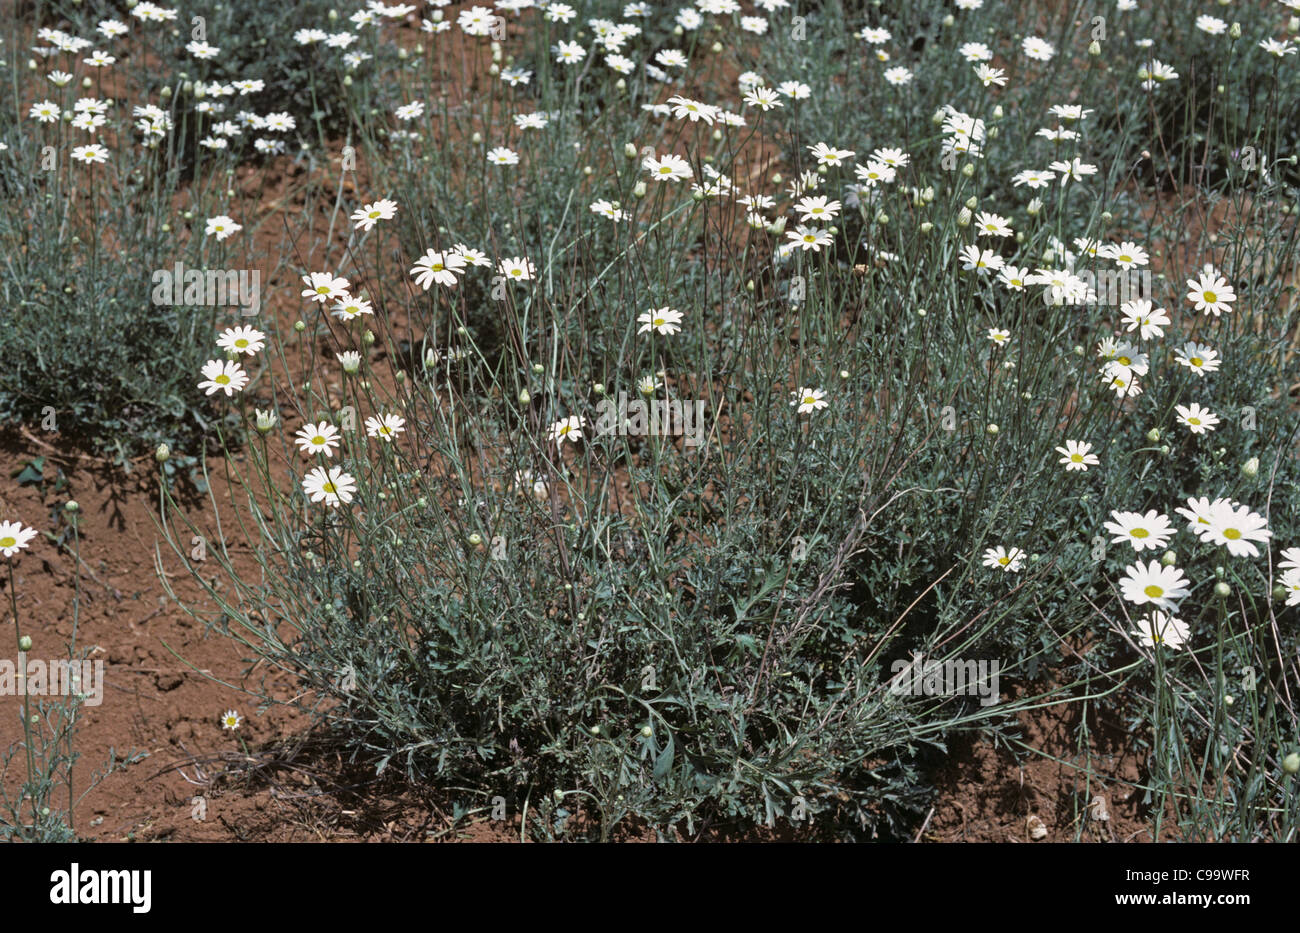 A flowering crop of pyrethrum (Chrysanthemum cinerariifolium) used as a natural insecticide, Kenya Stock Photo